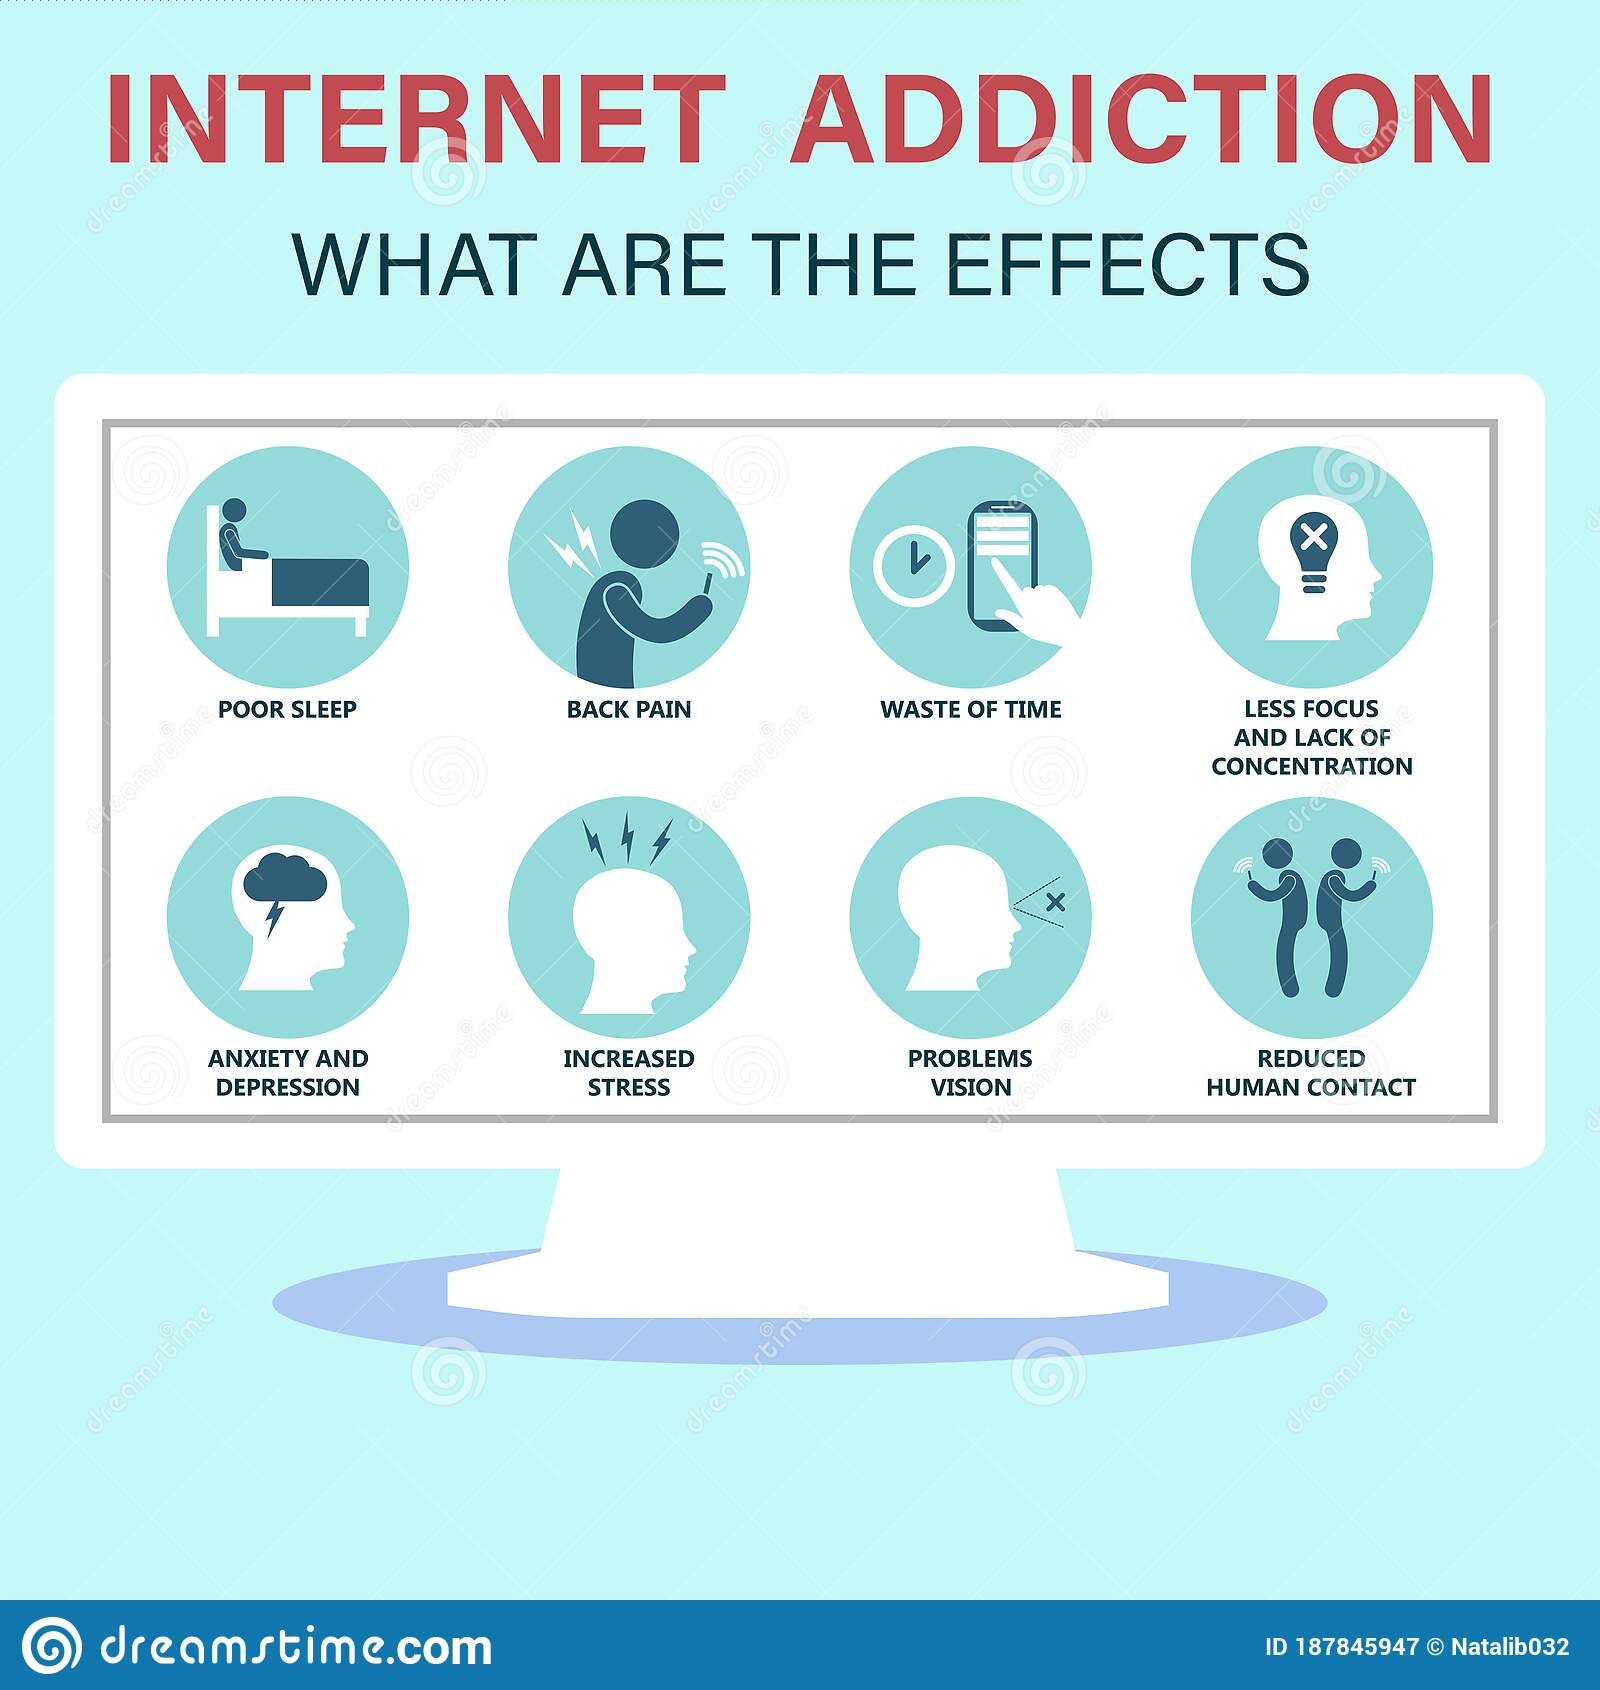 Effects of Internet Addiction